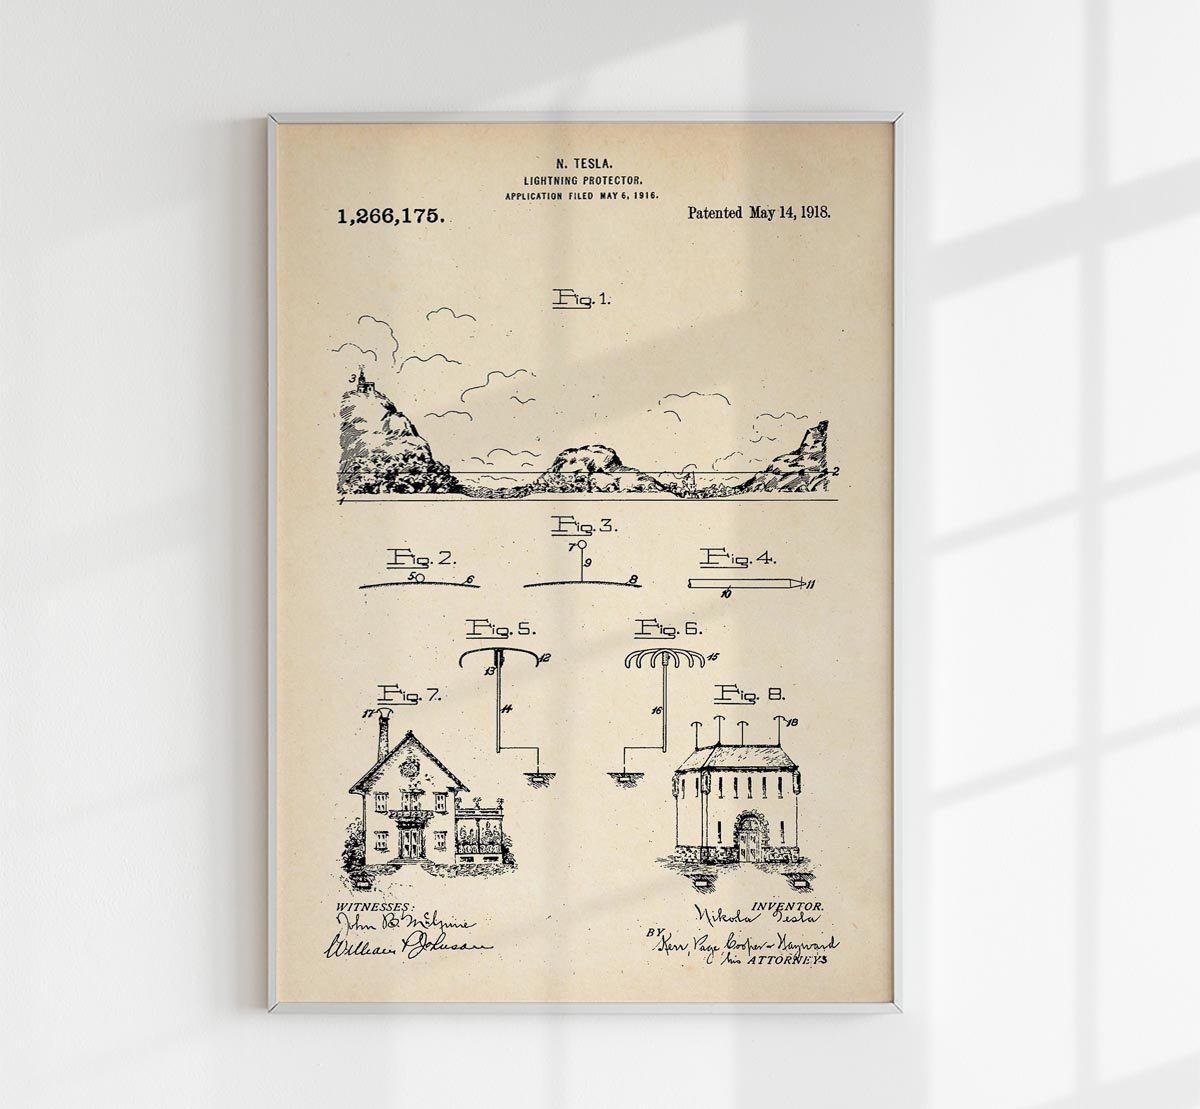 Tesla's Lightning Protector Patent Poster